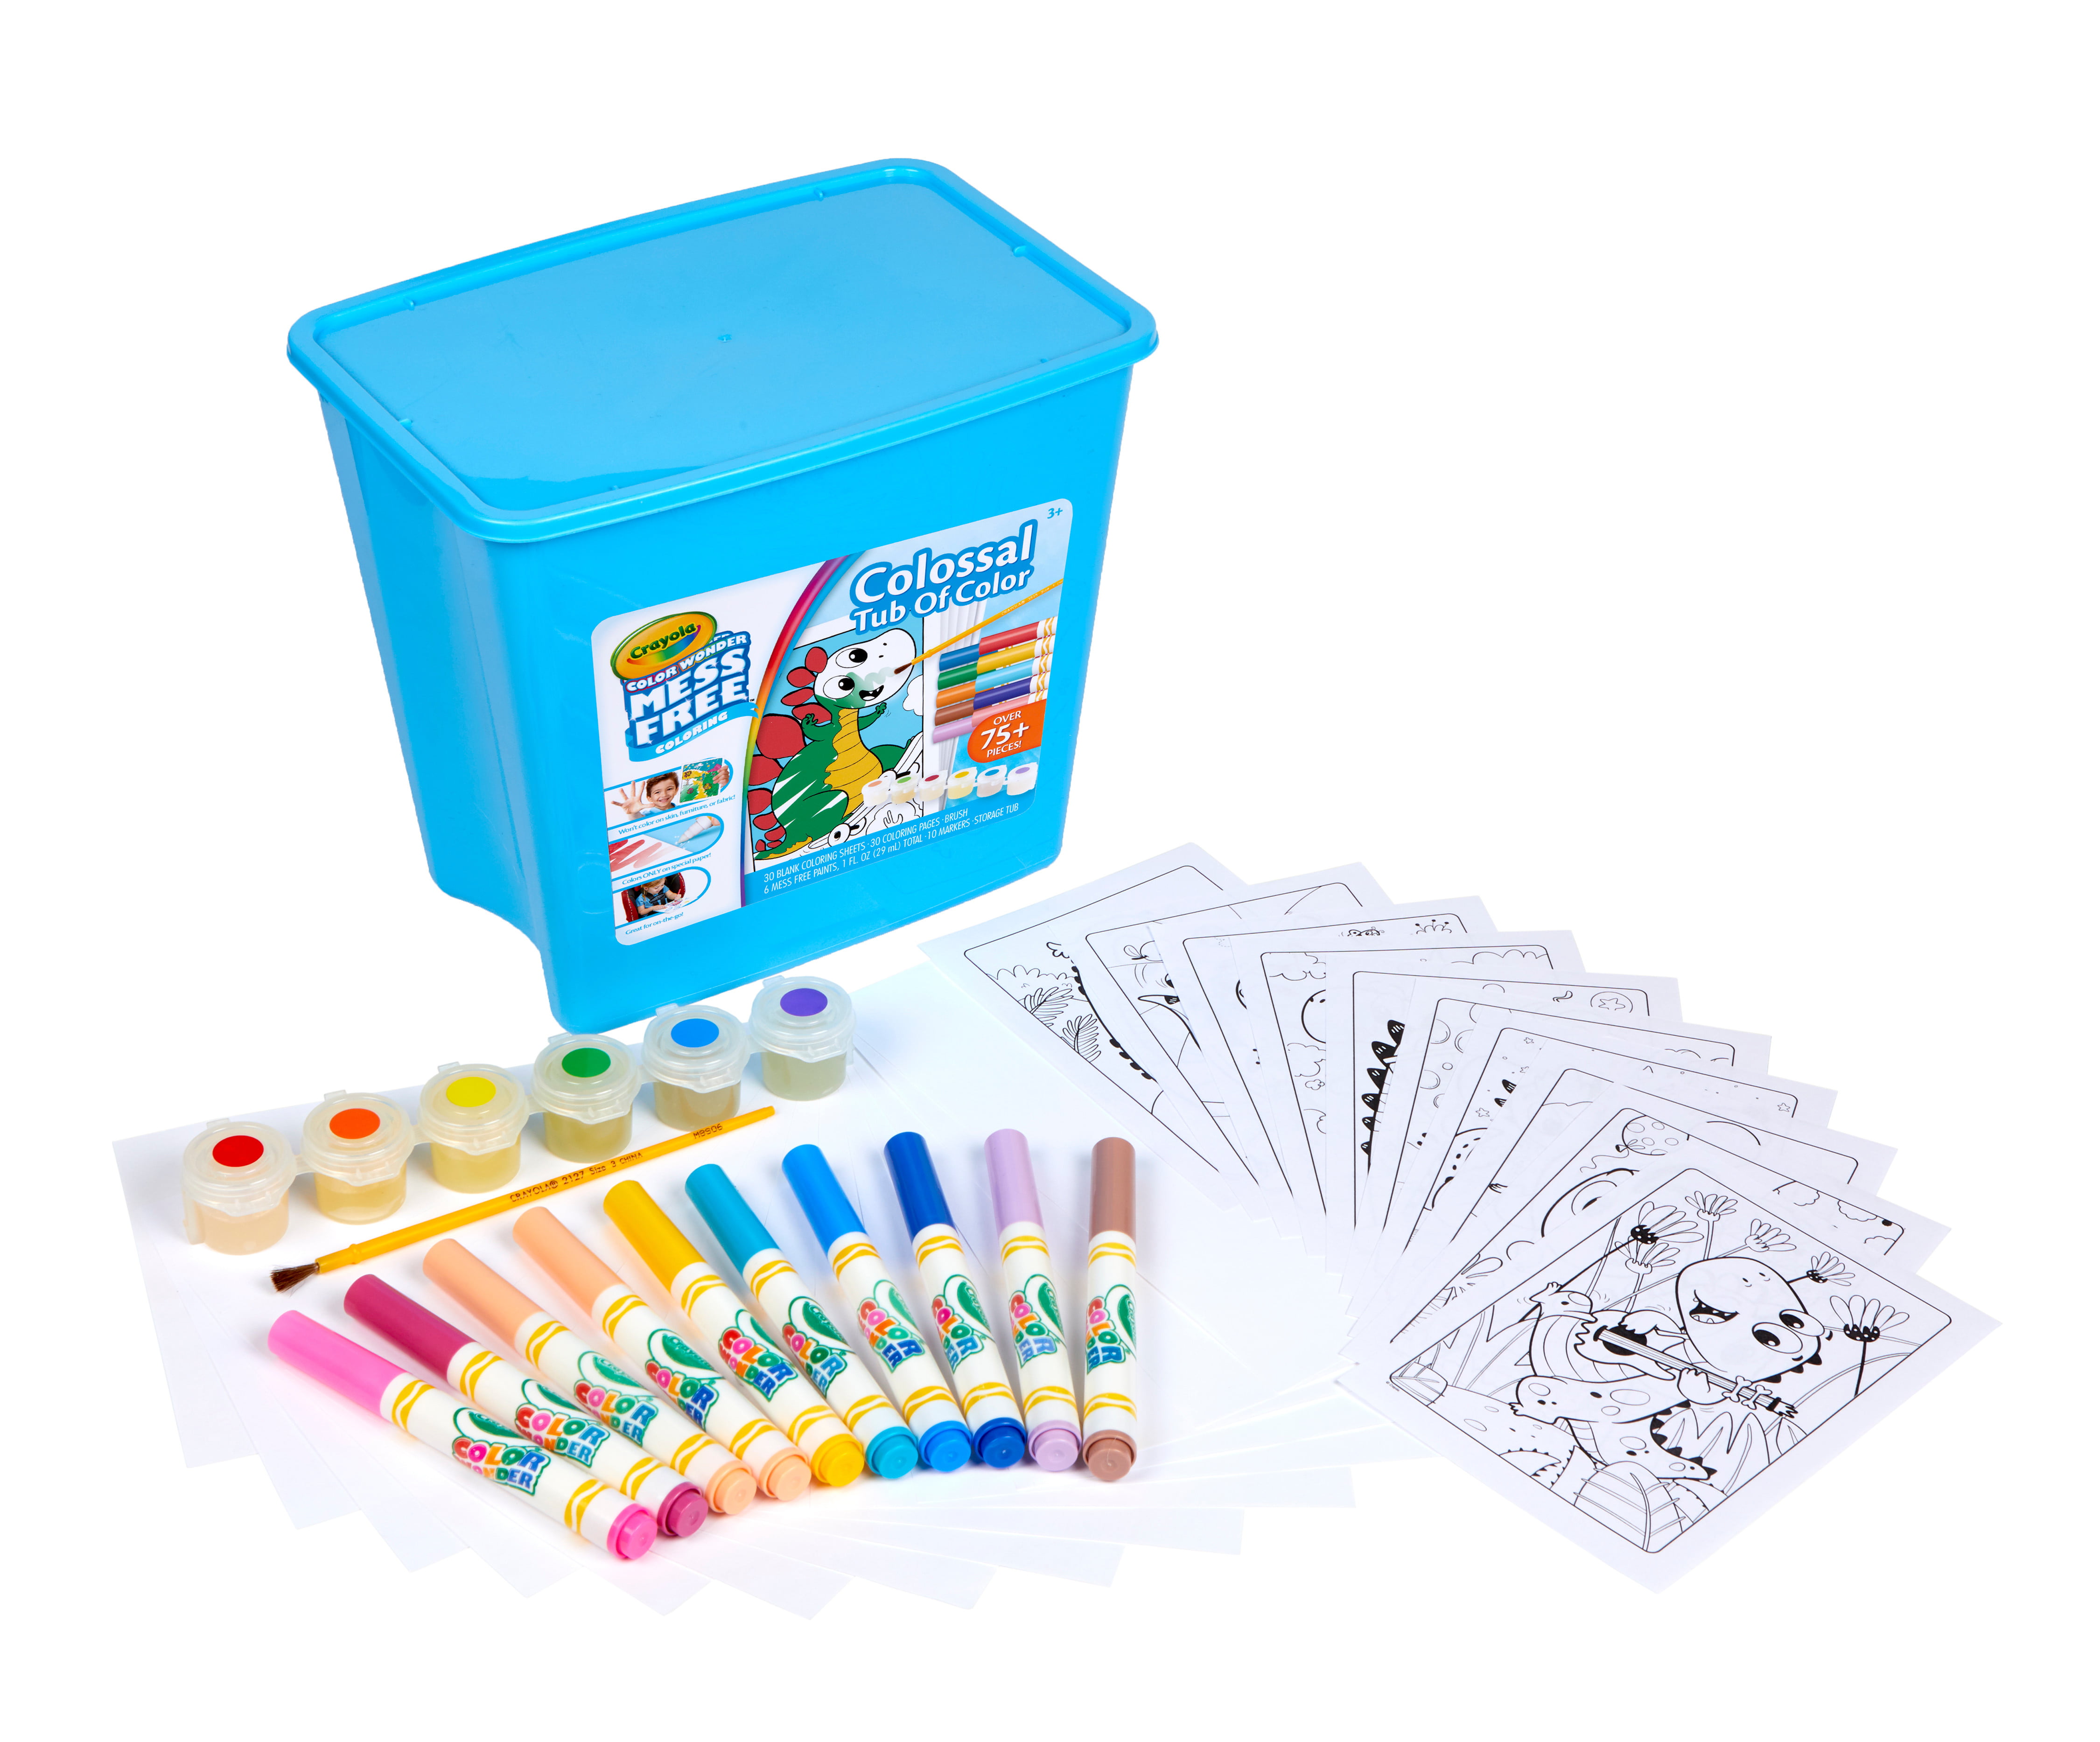 2 Pcs Paint Drawing Crayon Pen 20 Colors DIY Art Supplies Painting Kids Toys